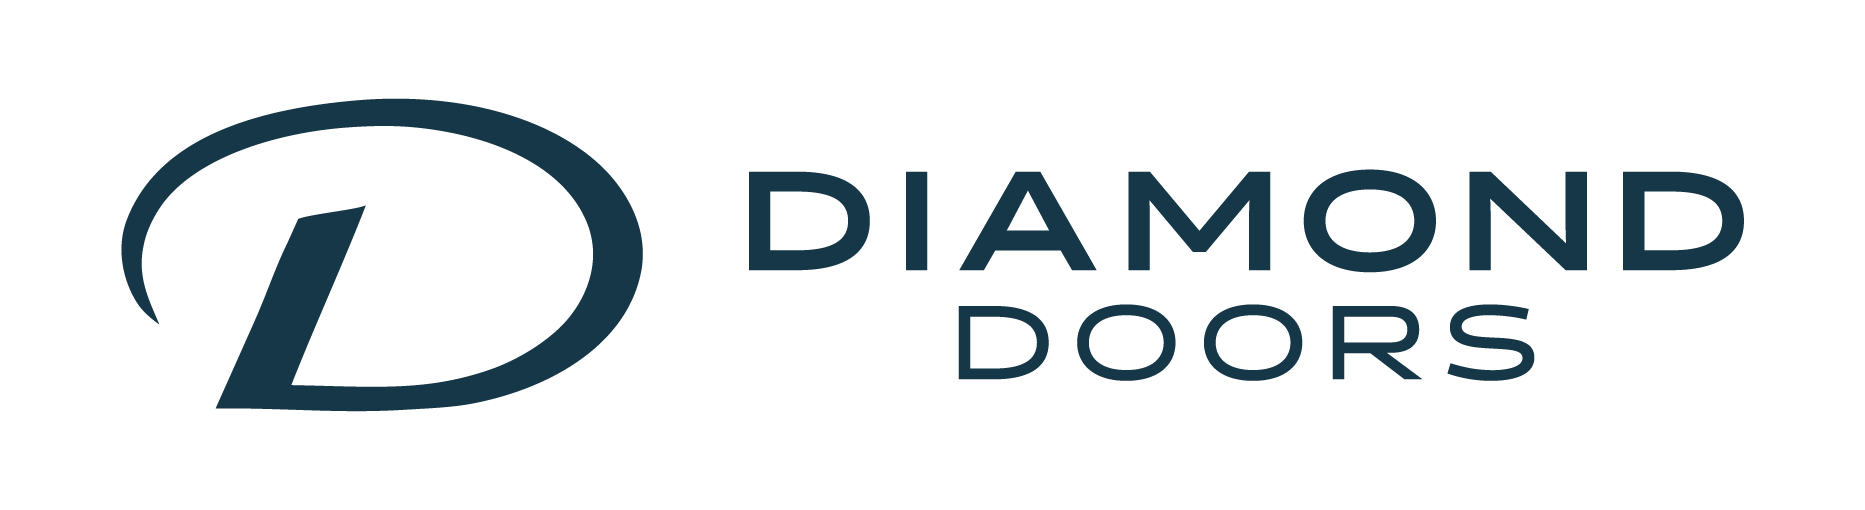 Diamond Doors logo / link